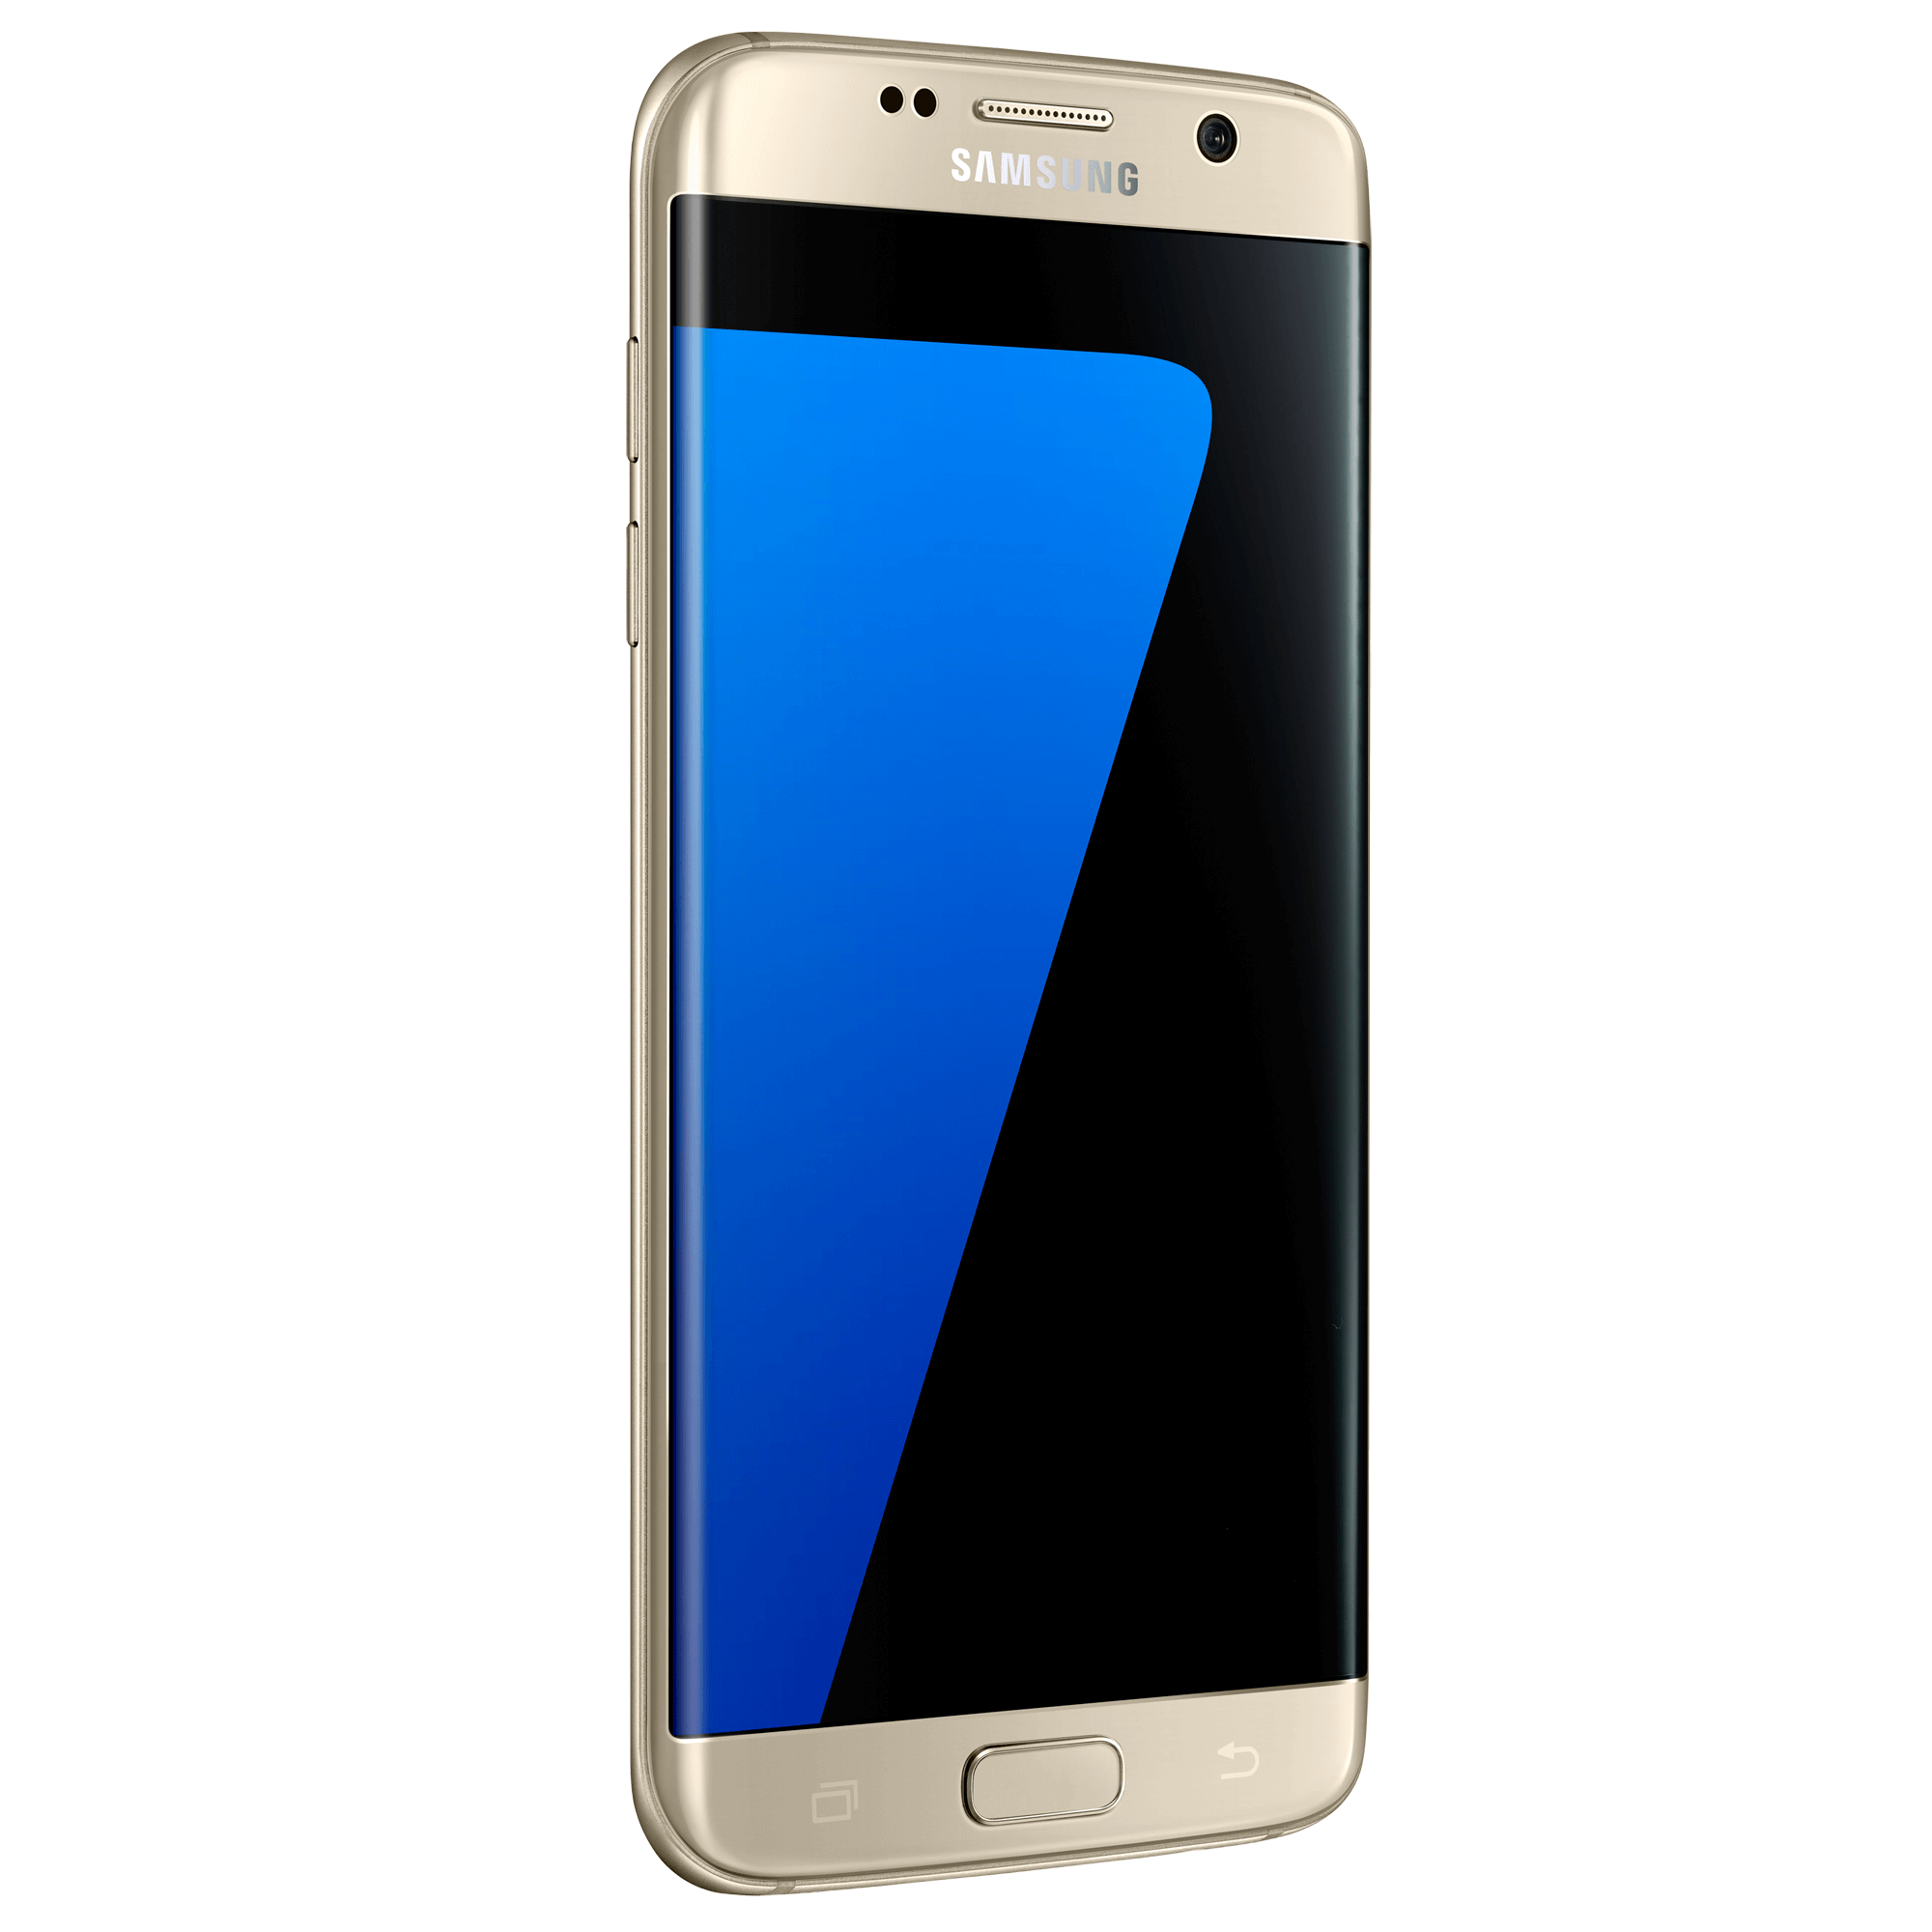 Samsung S7 Edge populairder dan :: Repair IT Now